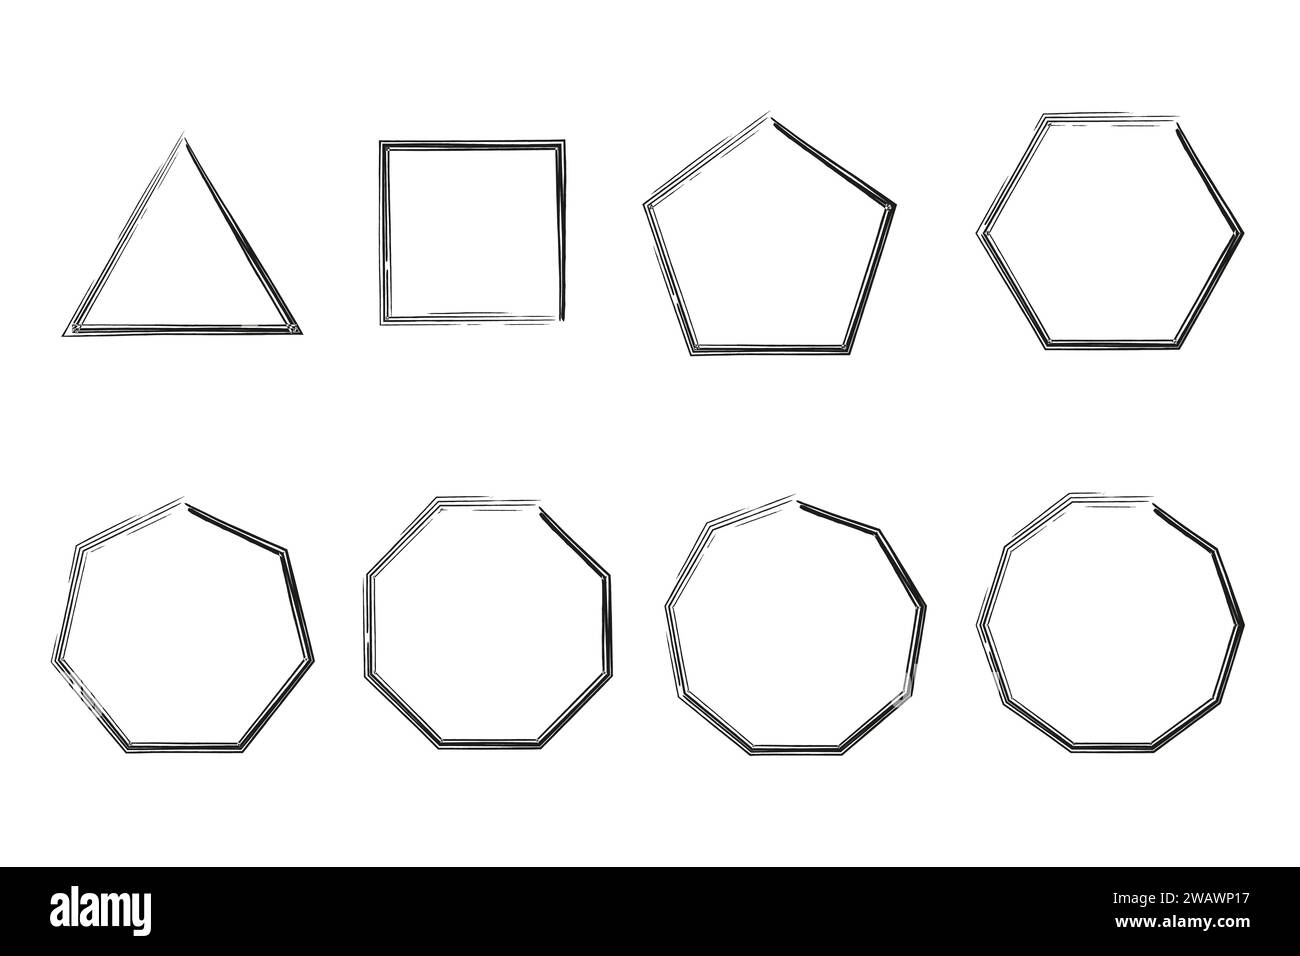 I ching hexagram Black and White Stock Photos & Images - Alamy